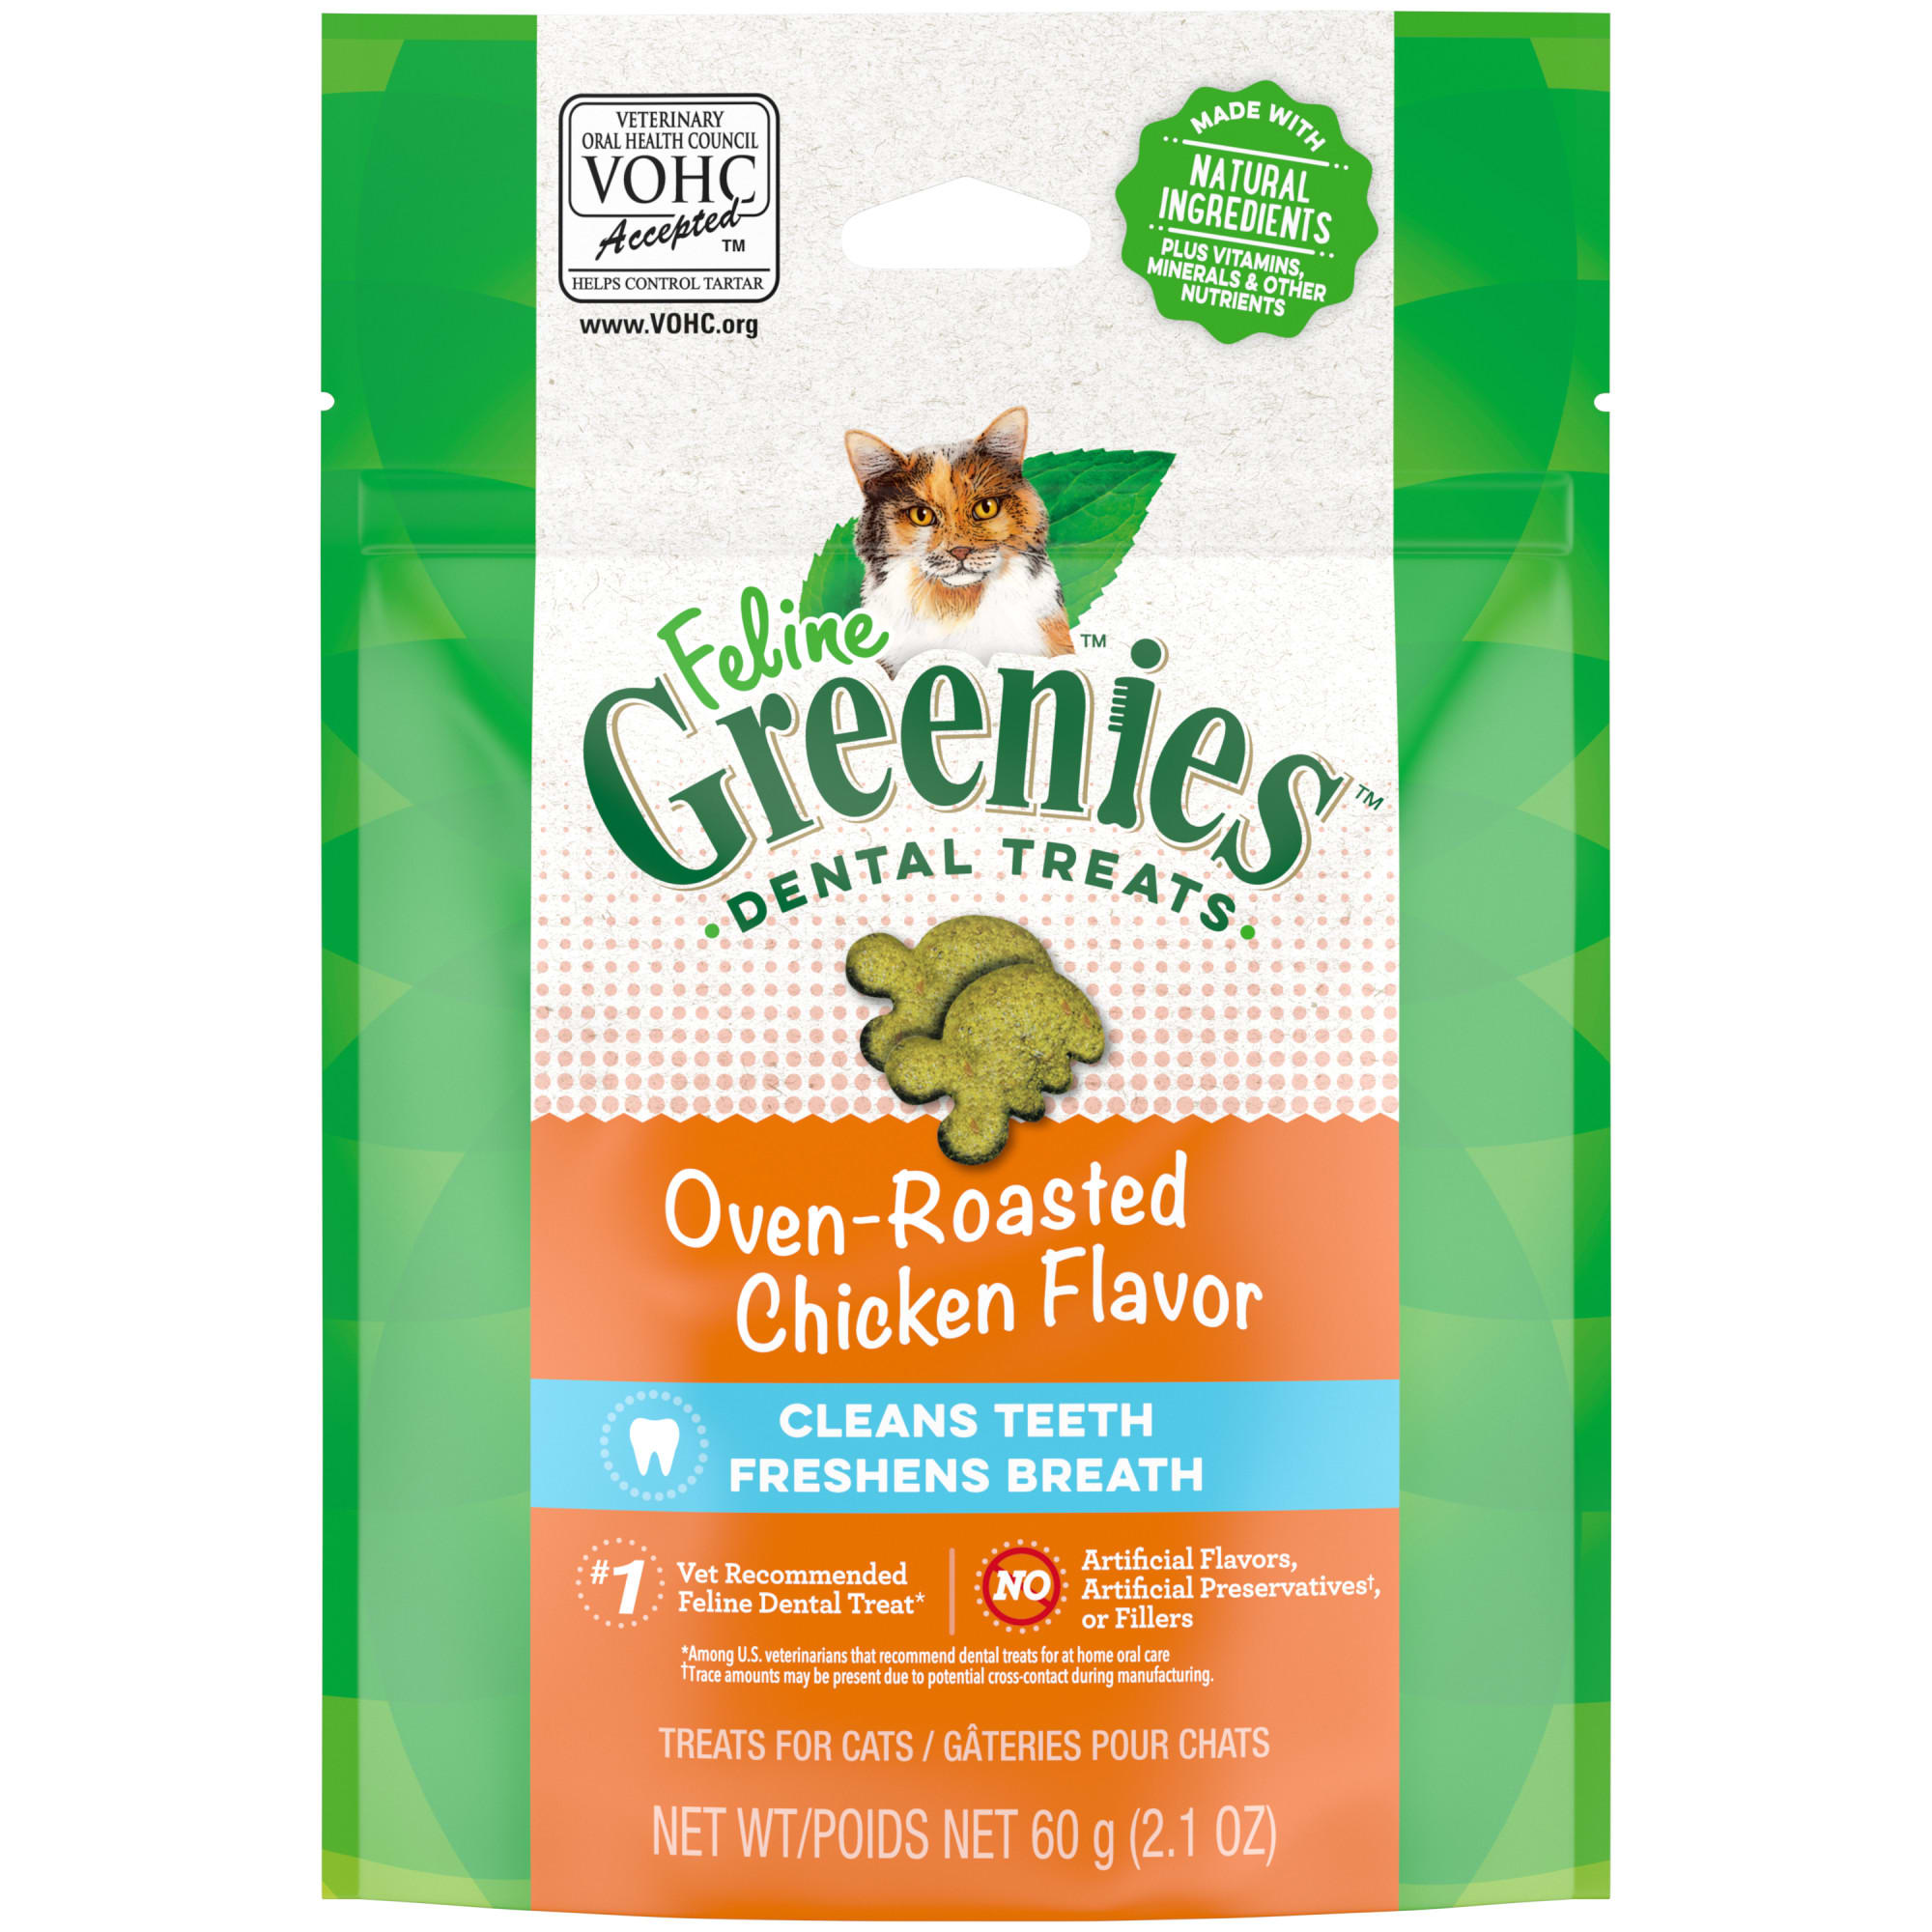 Feline Greenies Oven Roasted Chicken Flavor Adult Dental Cat Treats, 2